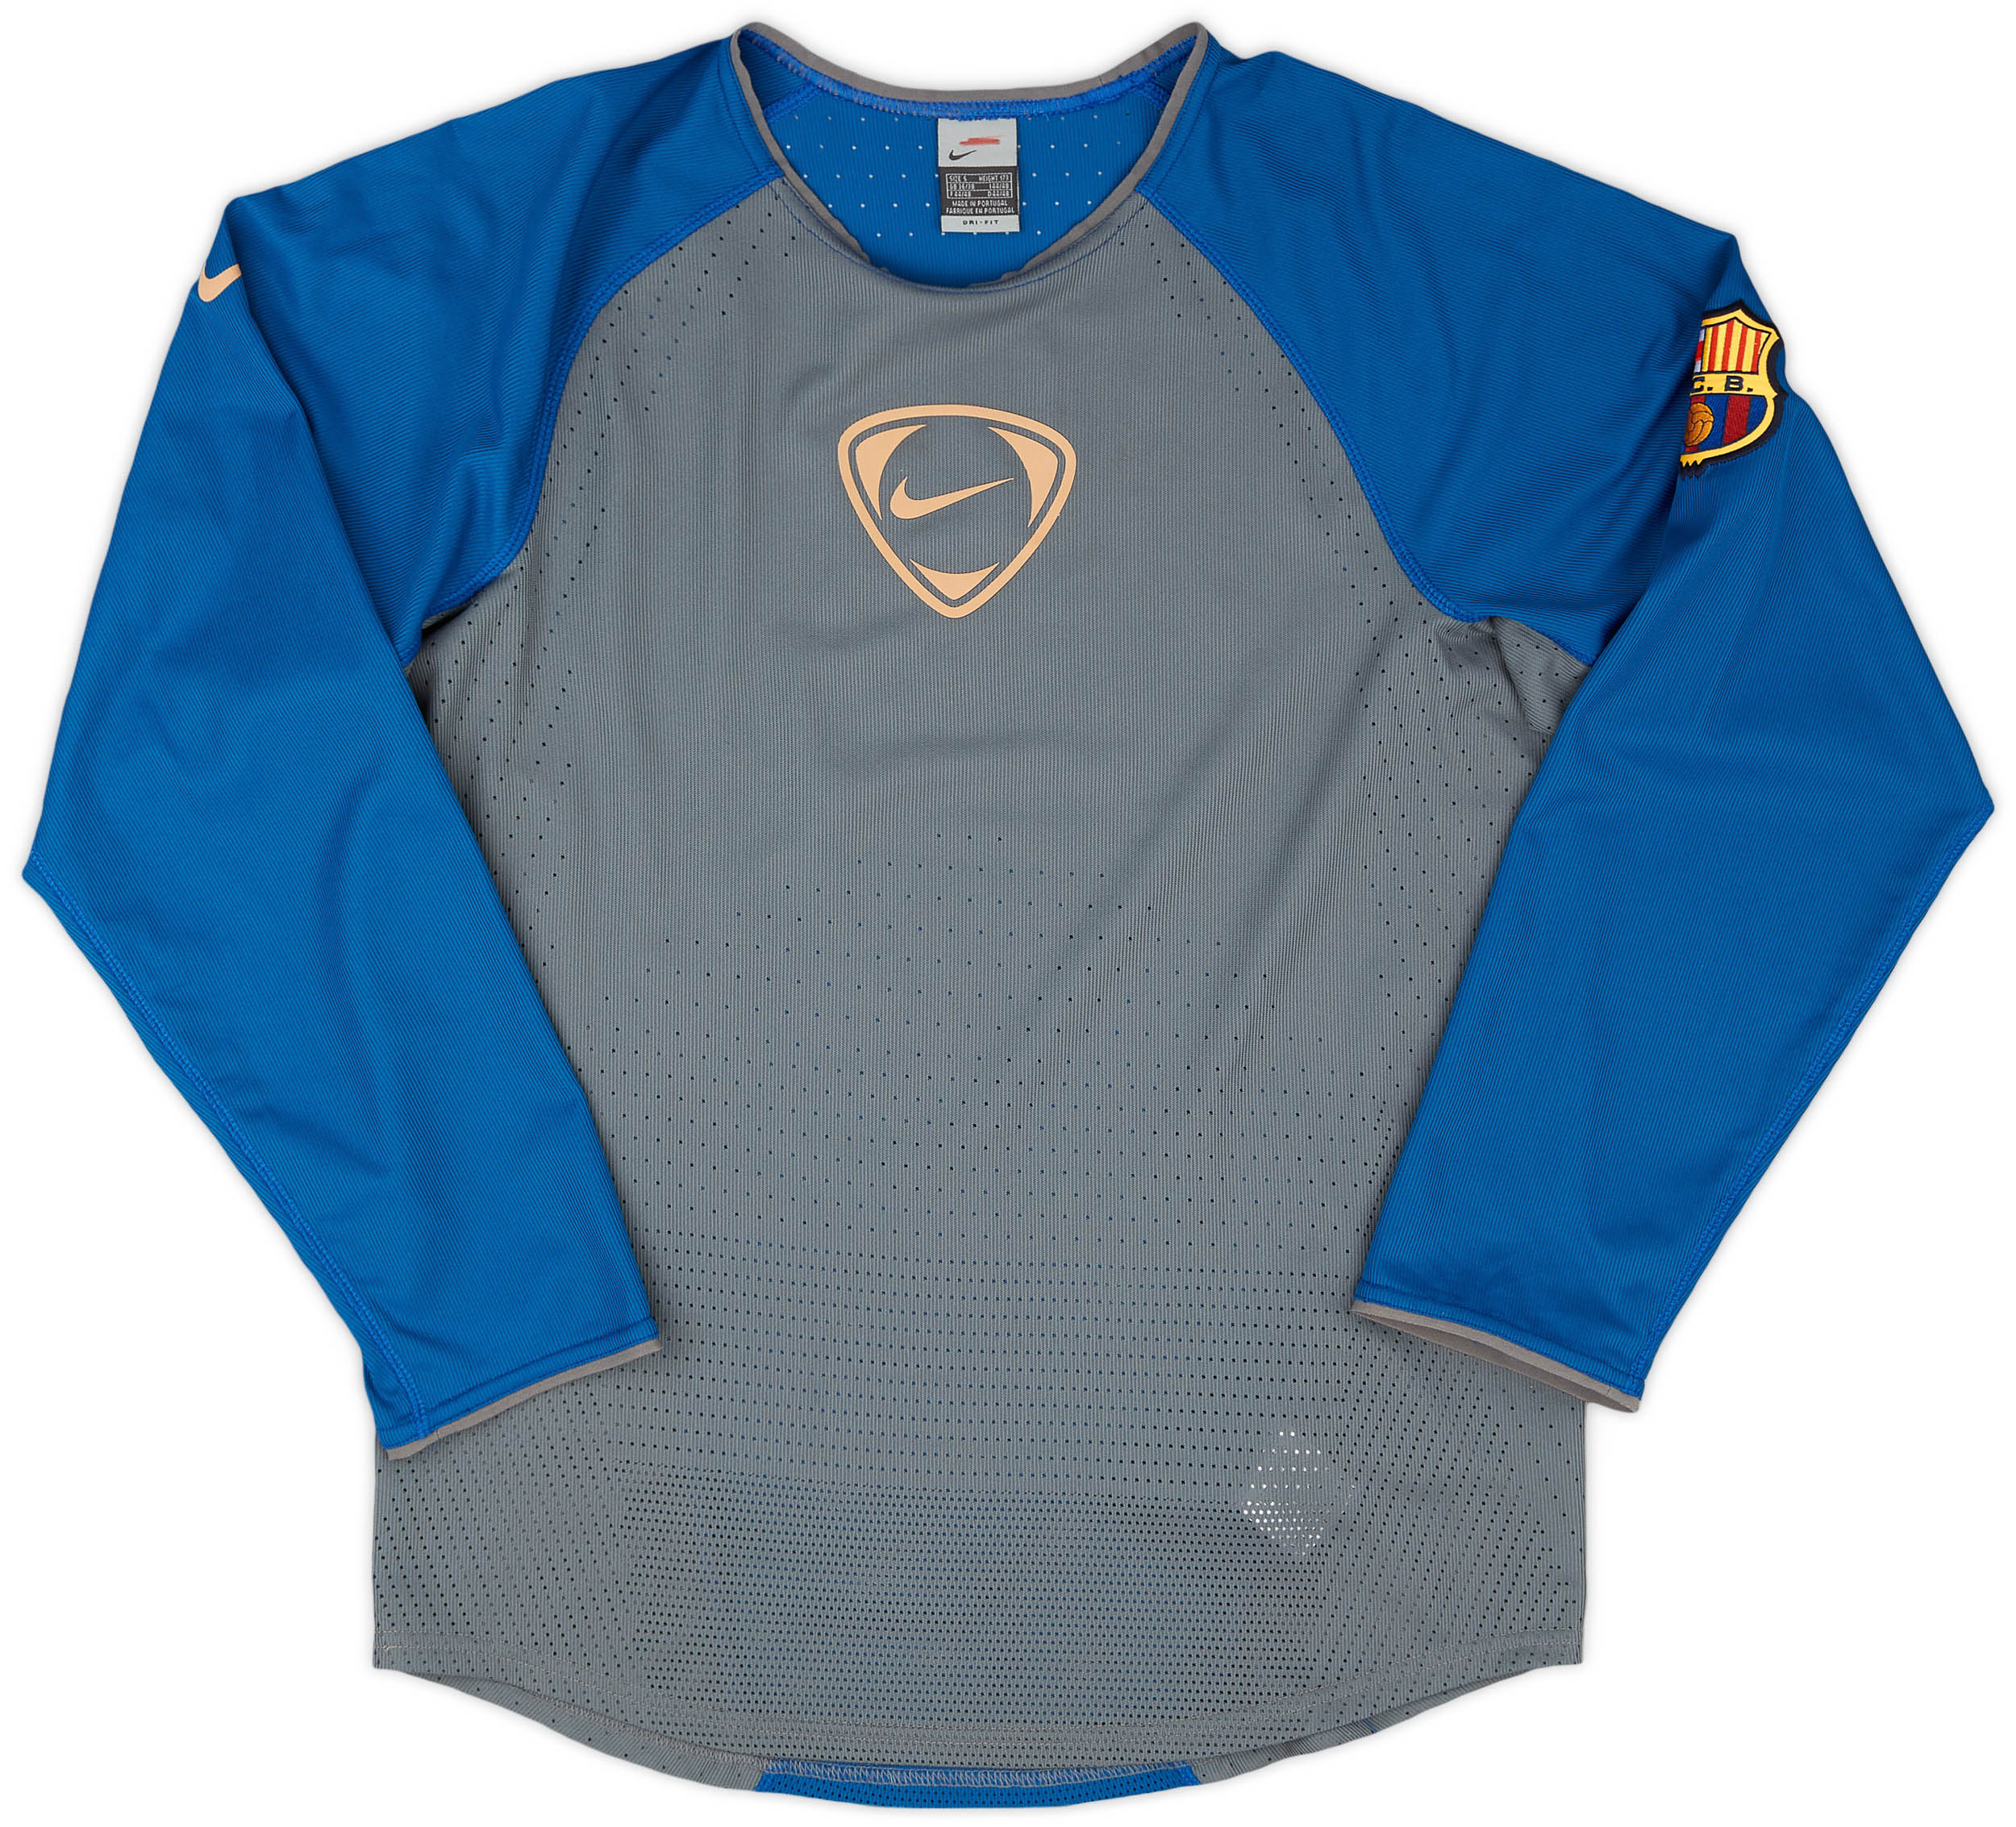 Unk, Shirts, Nba Multi Team Logo Patch Jersey Unk Size Xl Shirt Pullover